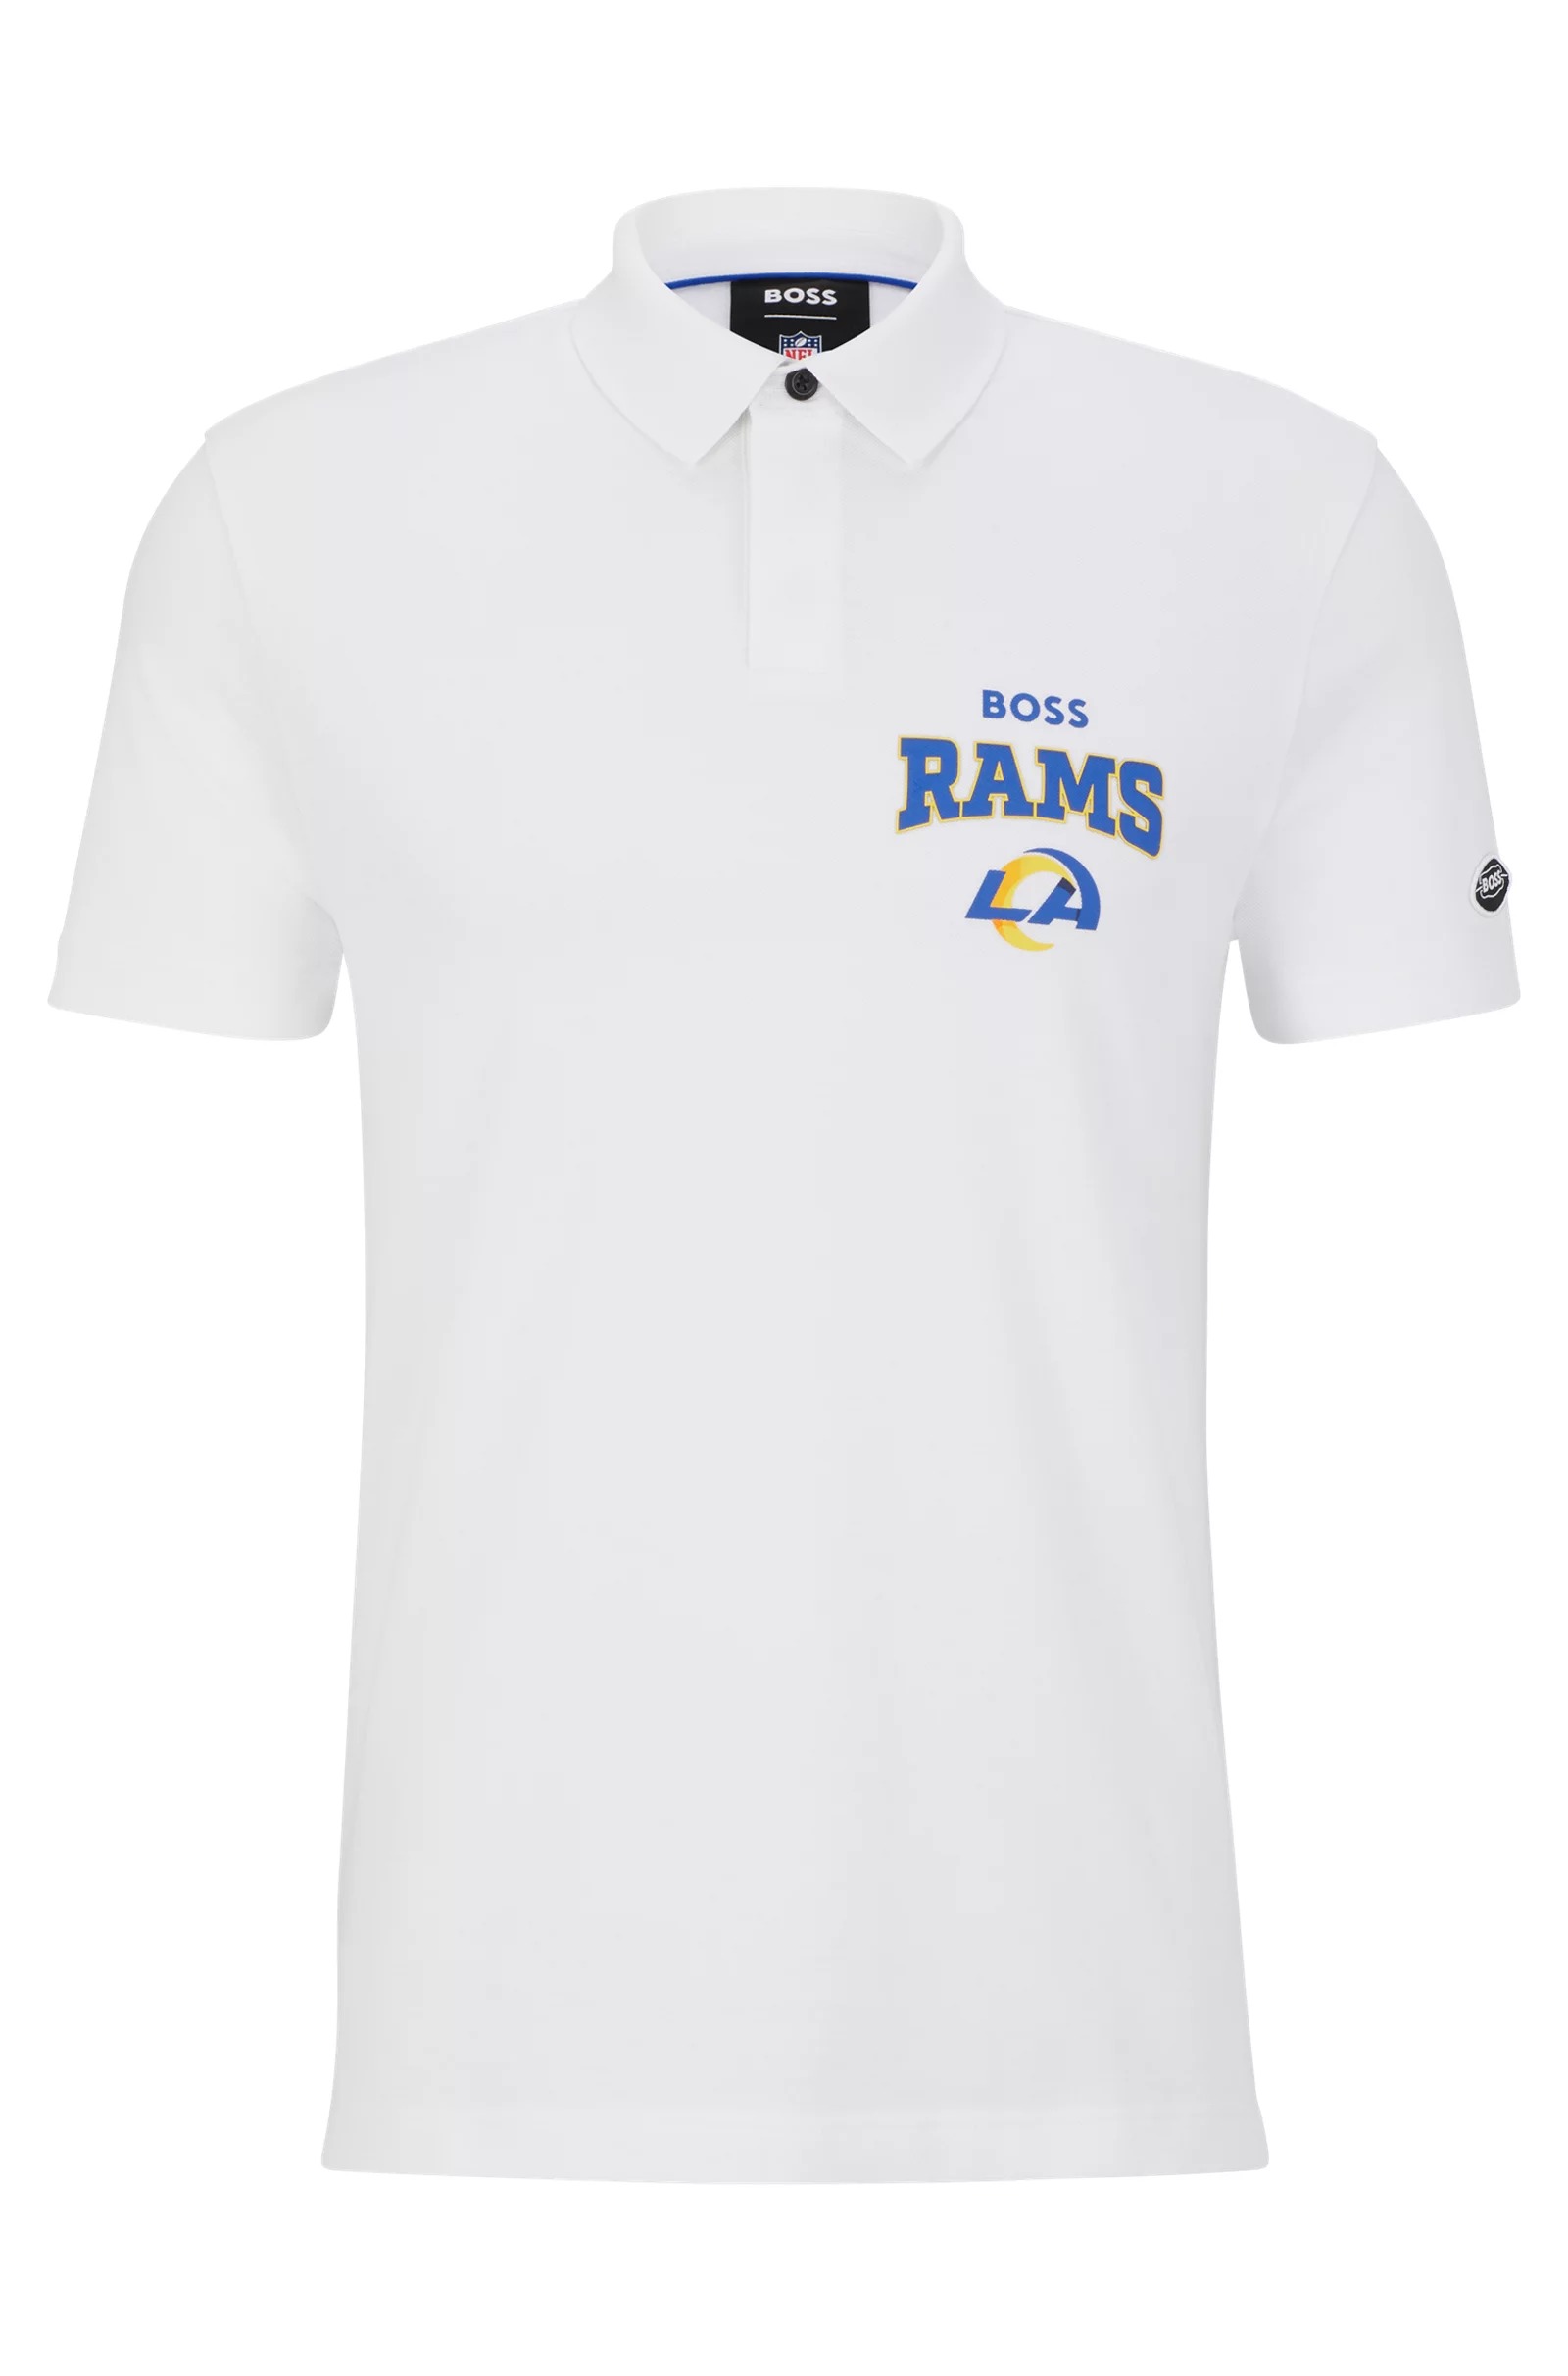 Футболка поло Boss X Nfl Cotton-piqué With Collaborative Branding Rams, белый футболка поло boss x nfl cotton piqué with collaborative branding rams черный